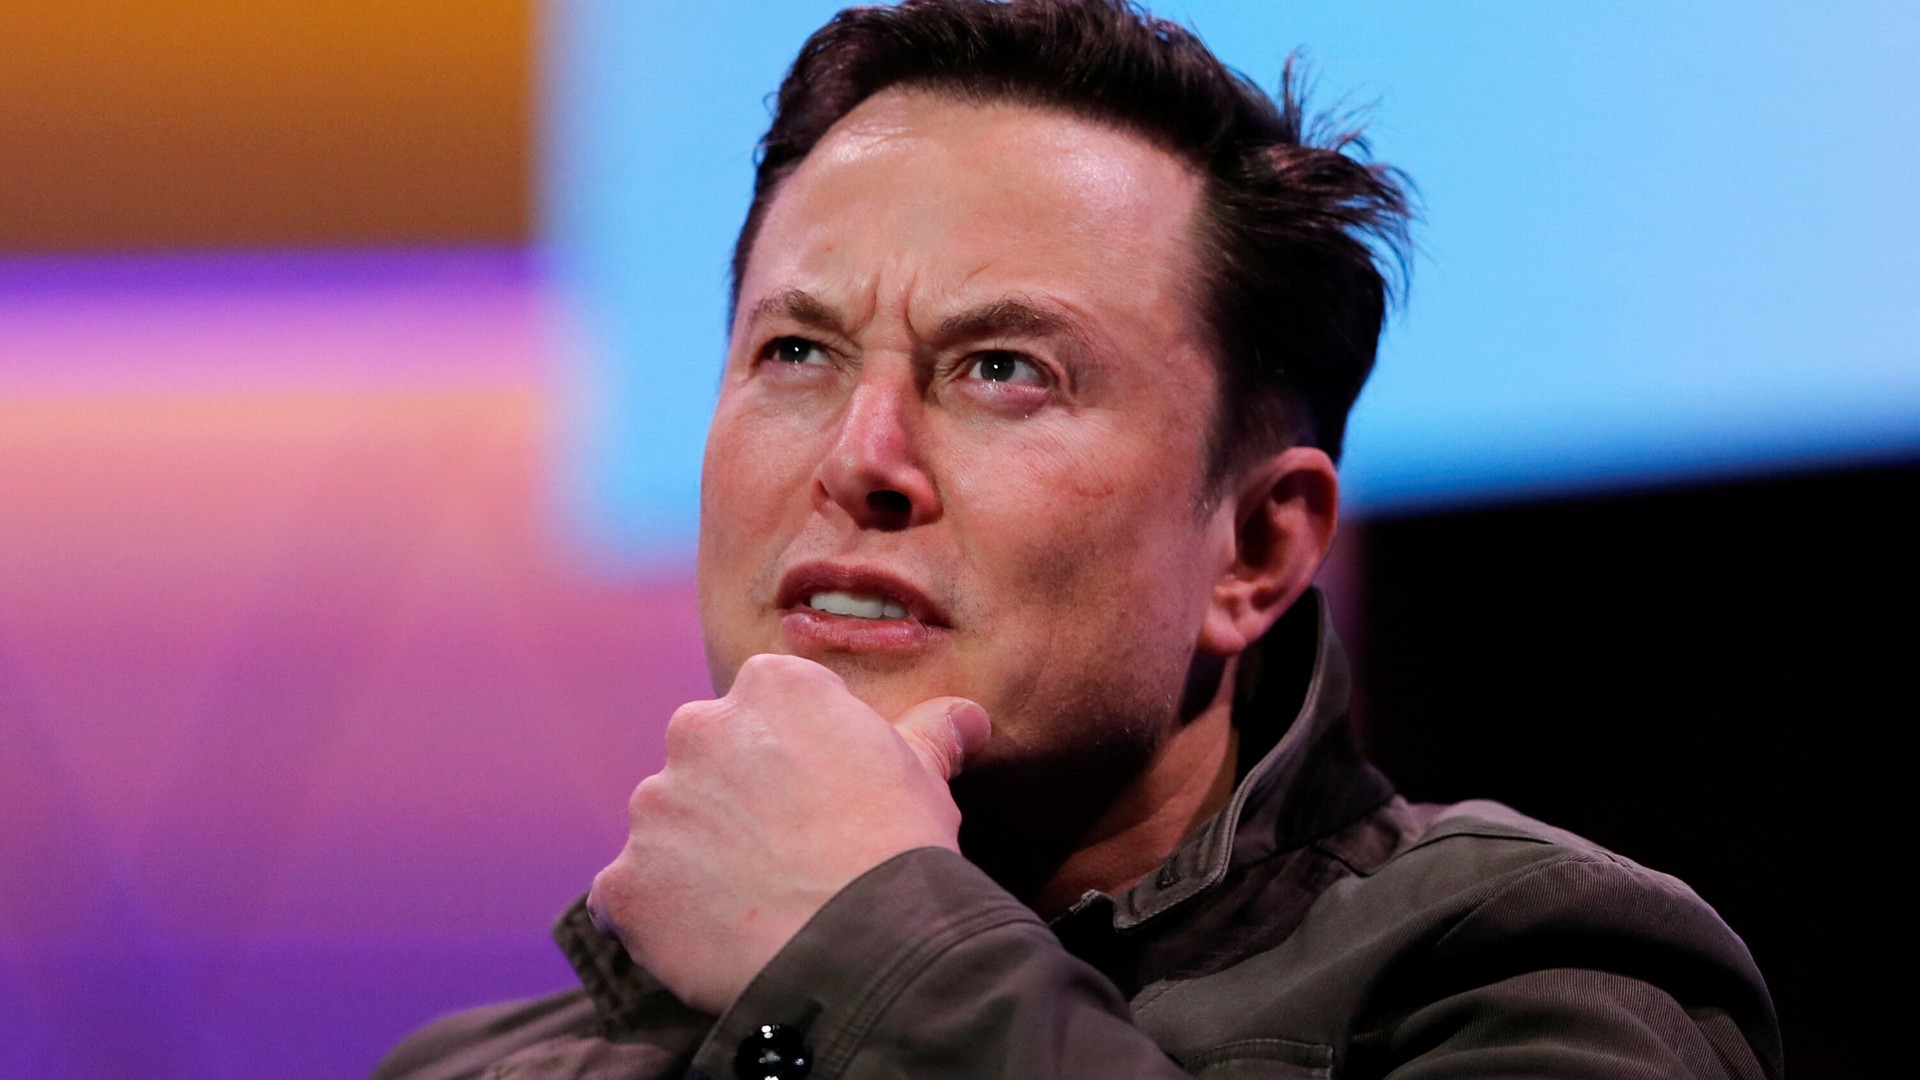 Elon Musk Hires PlayStation 3 Hacker to Fix Twitter
